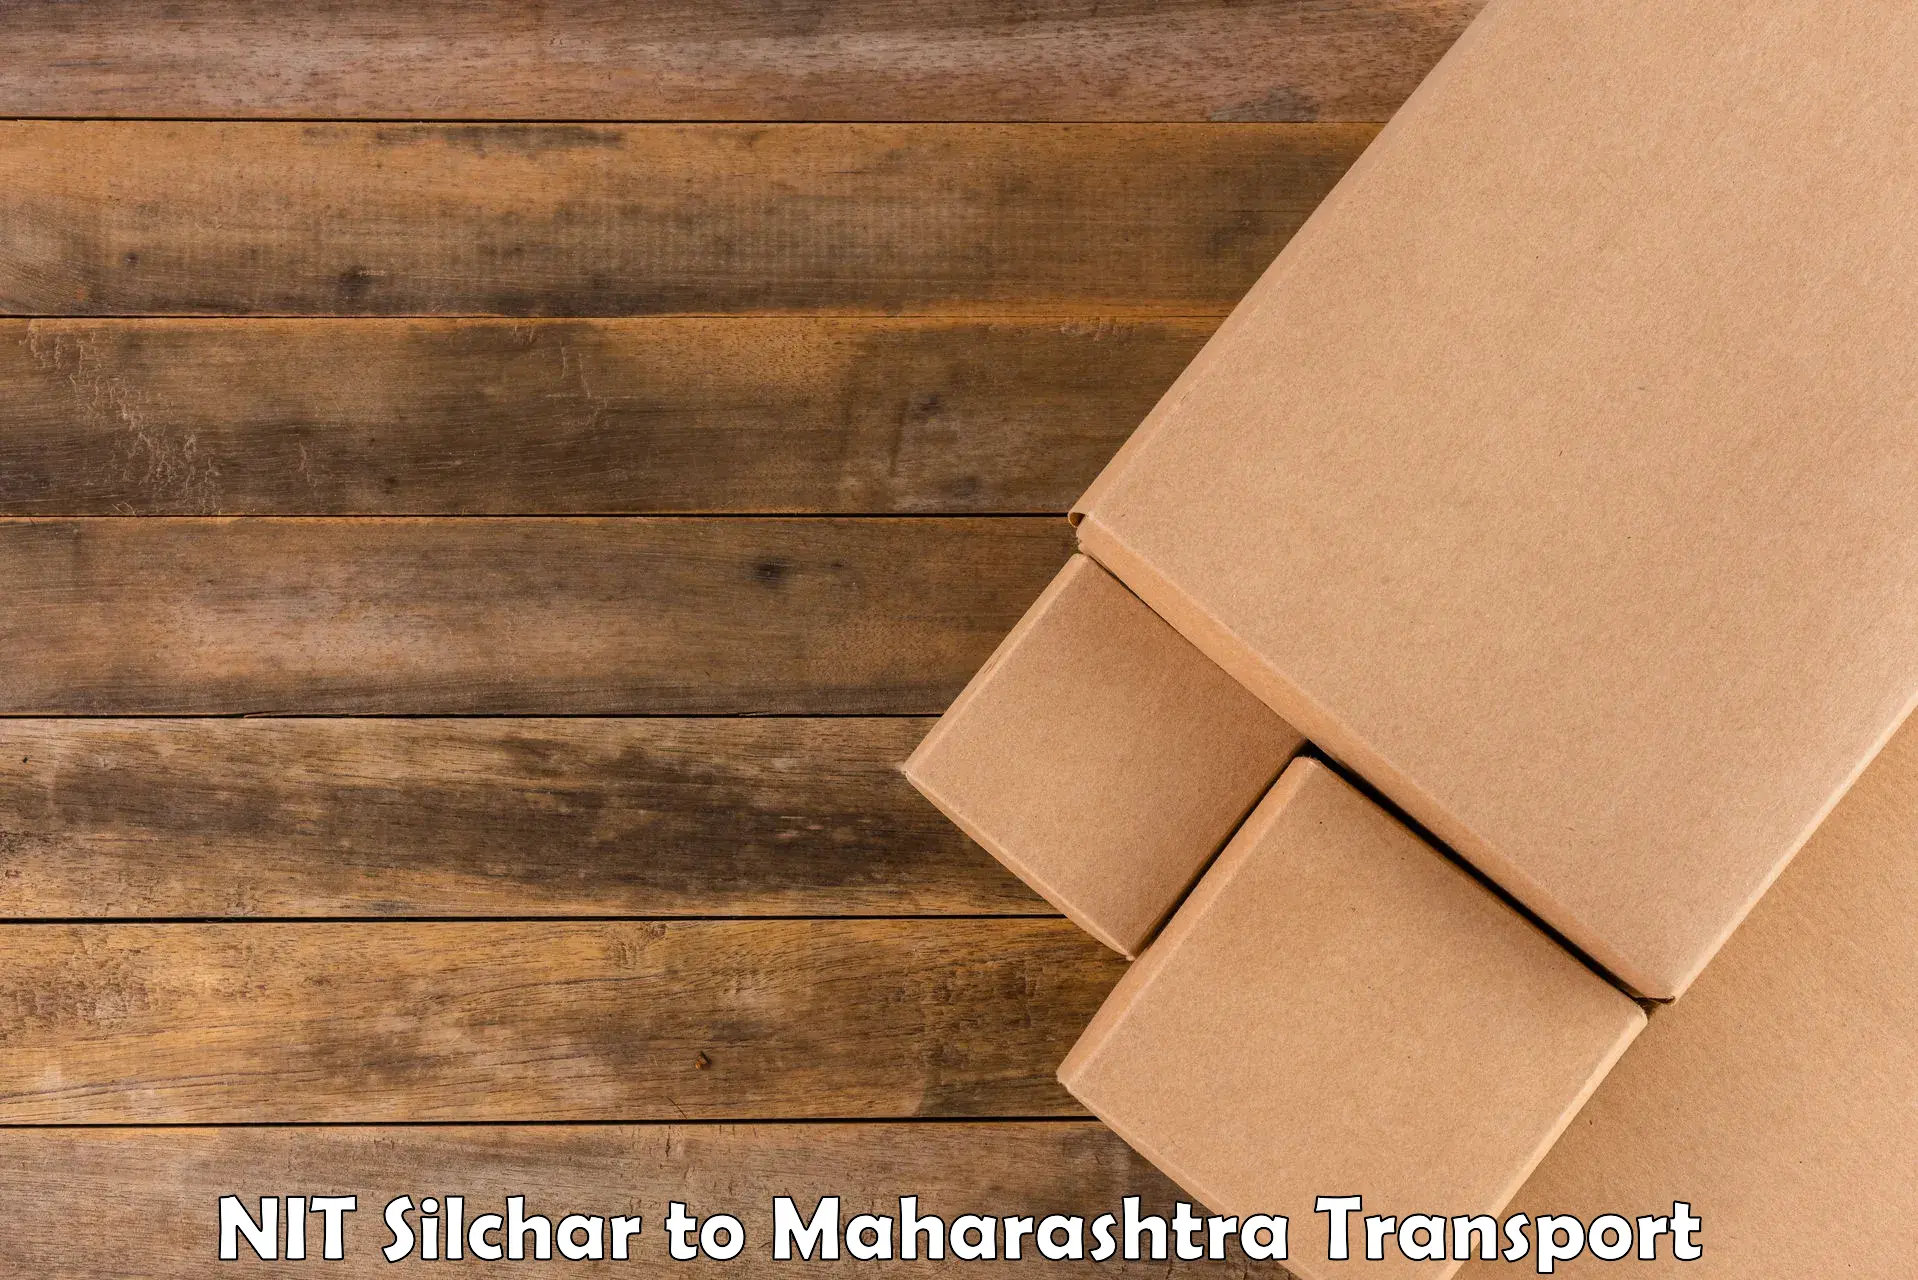 Cycle transportation service NIT Silchar to Mahabaleshwar